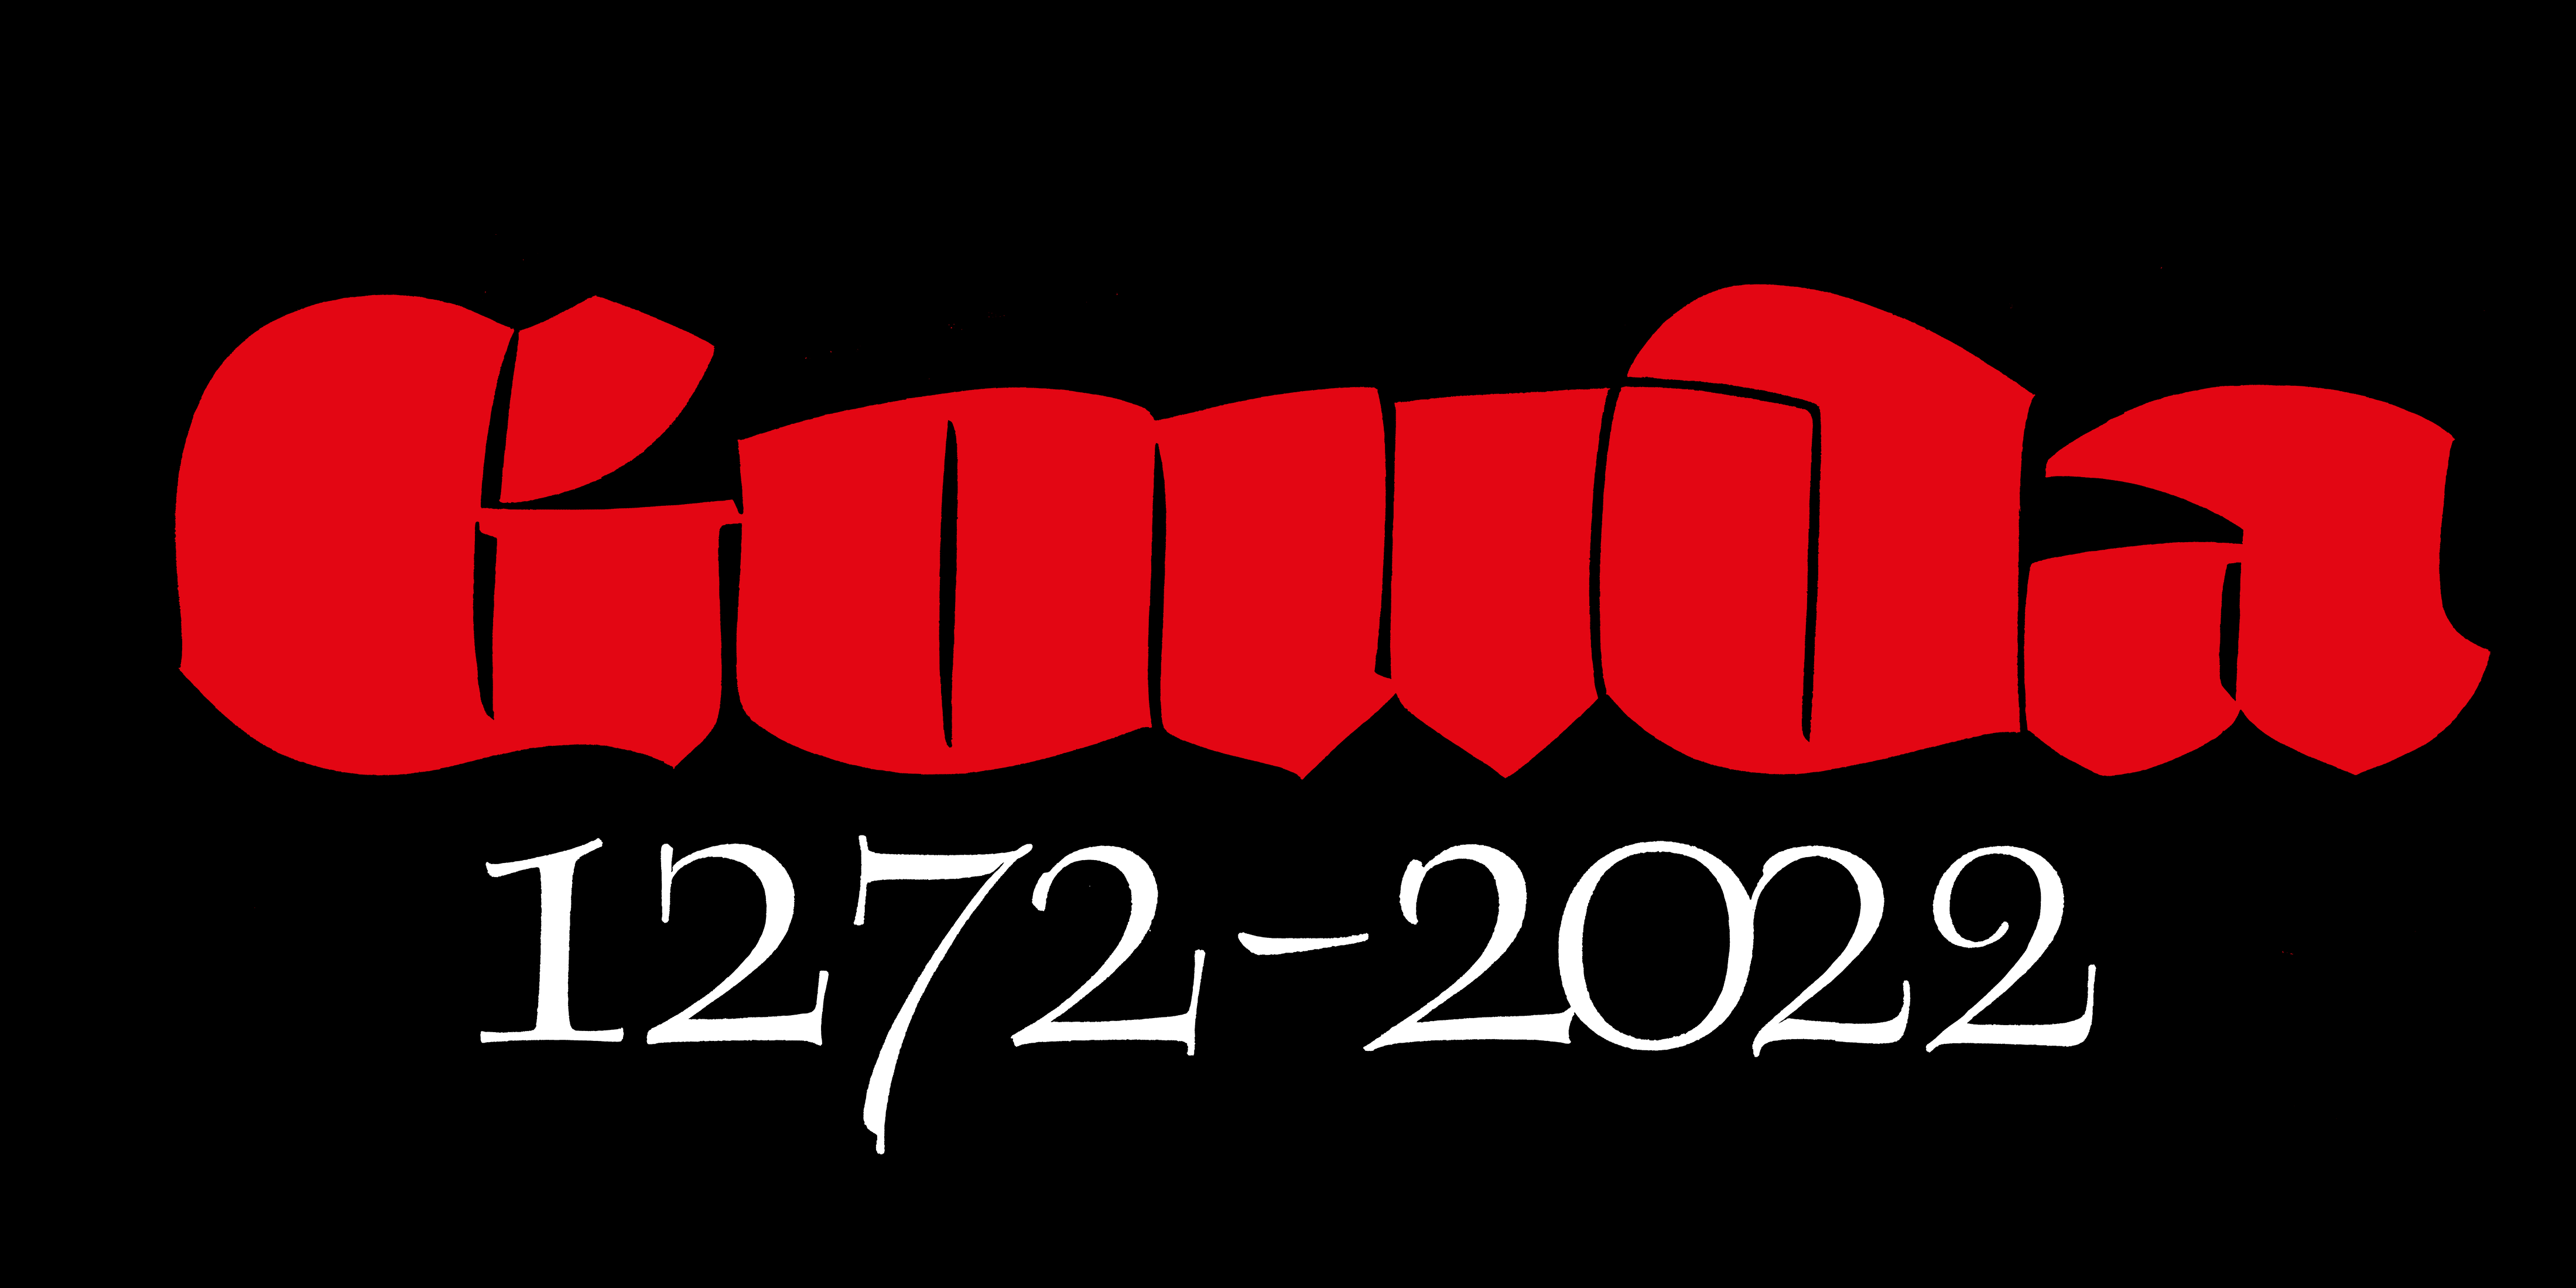 "Gouda 1272-2022" digital drawn lettering in red on black background by Elmo van Slingerland